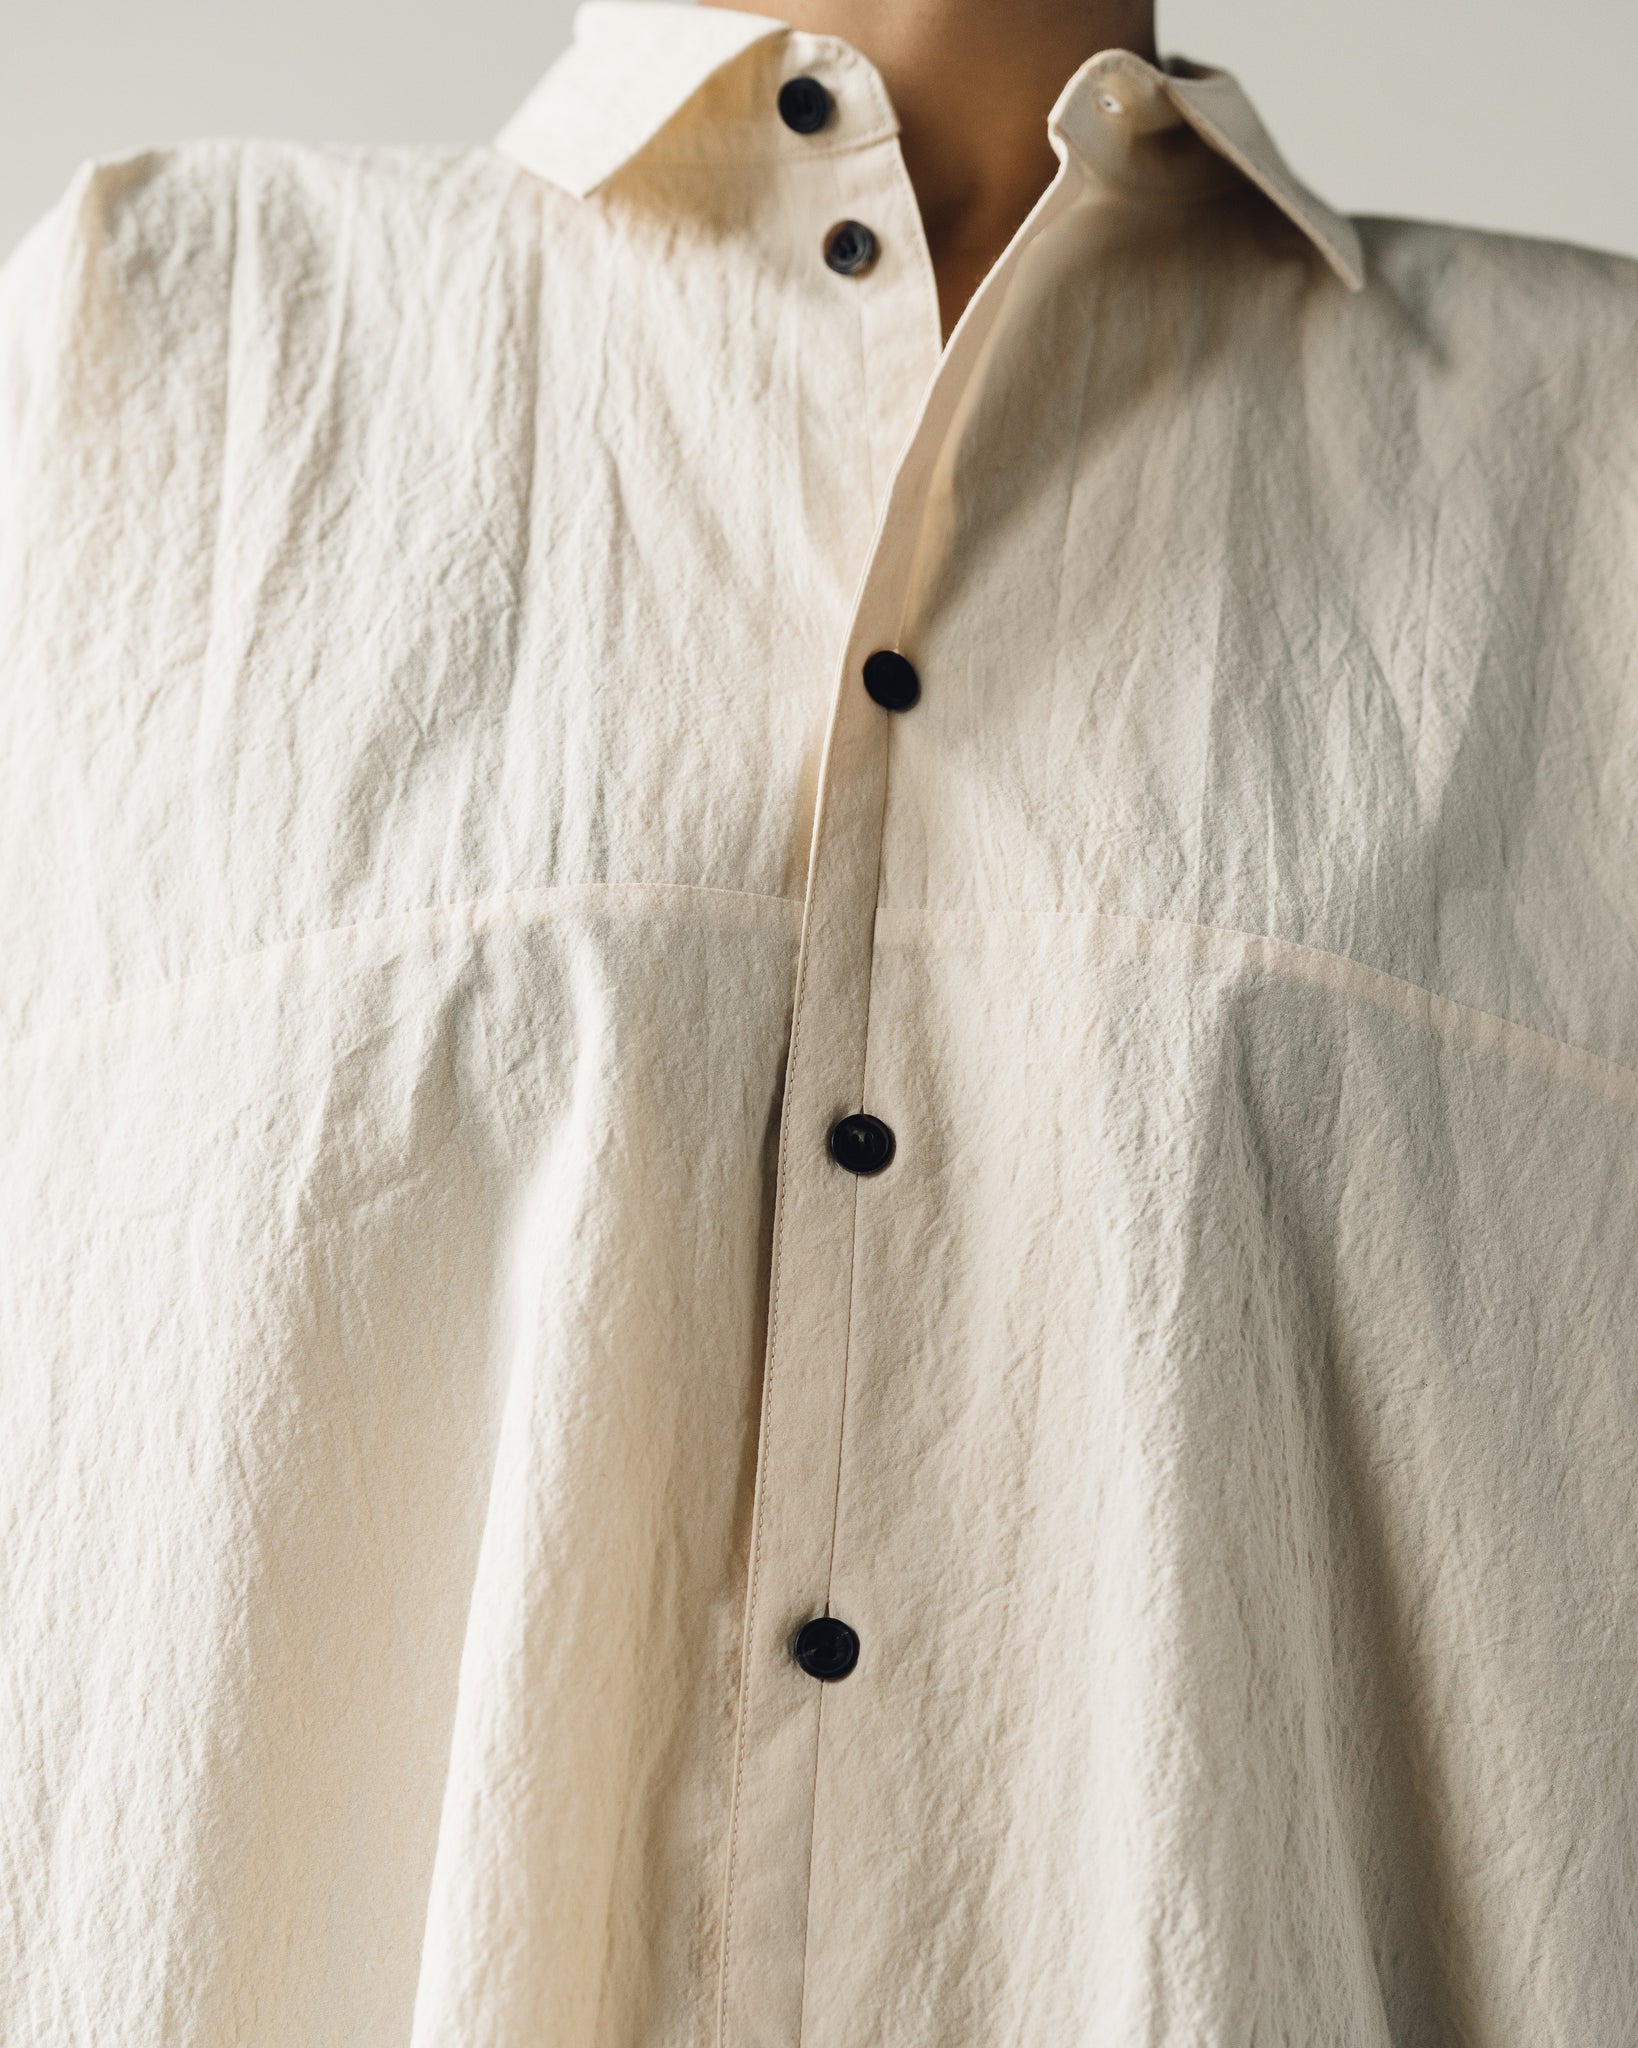 Jan-Jan Van Essche Shirt #73, Kinari Cotton/Wool Typewriter